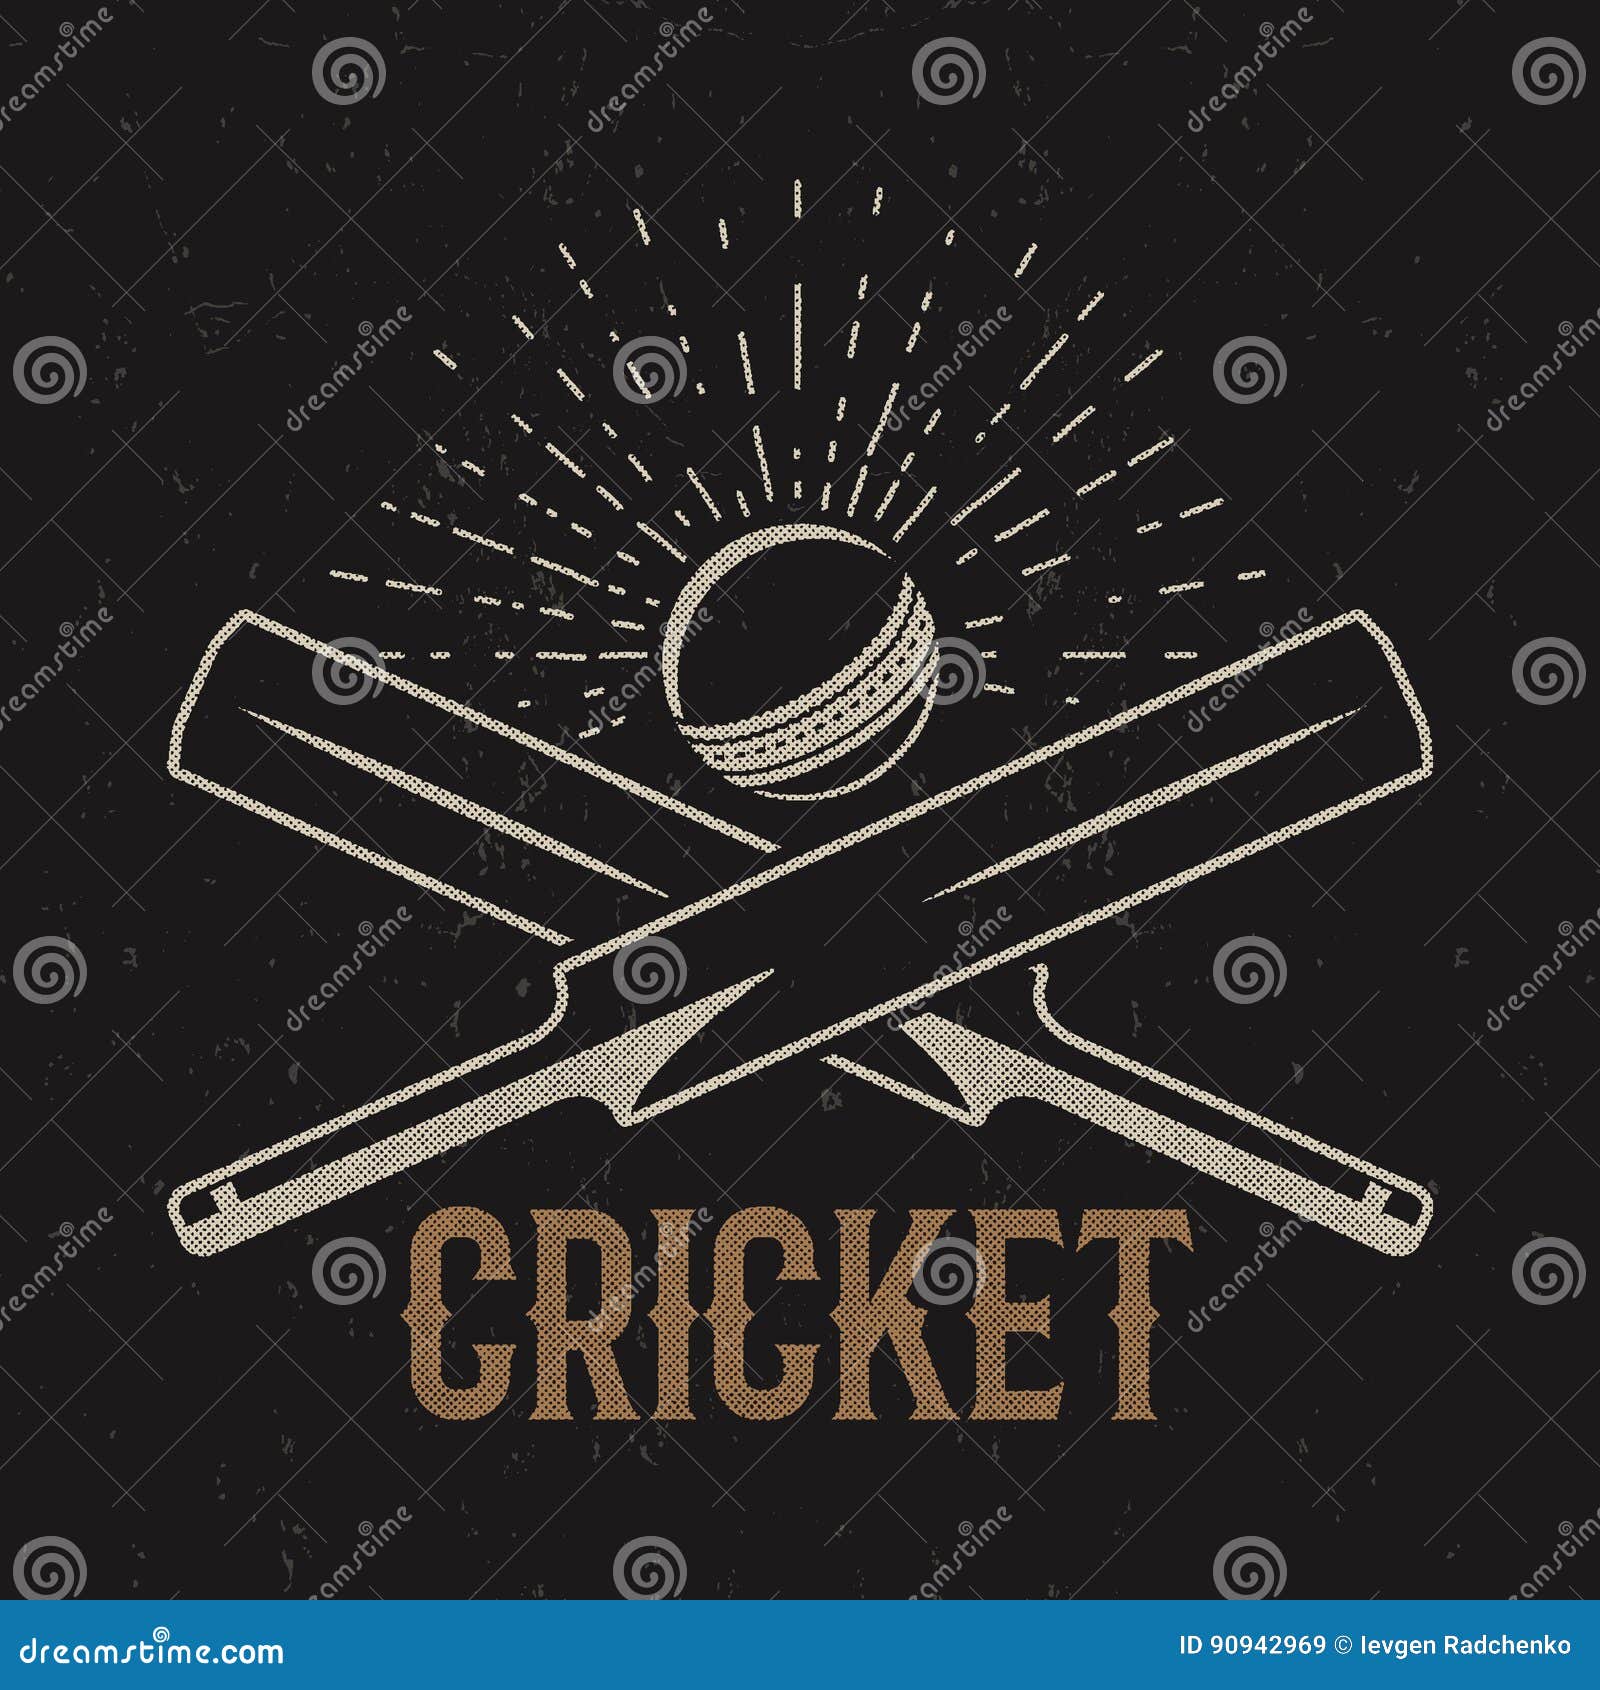 2,598 Cricket T Shirt Design Images, Stock Photos & Vectors | Shutterstock